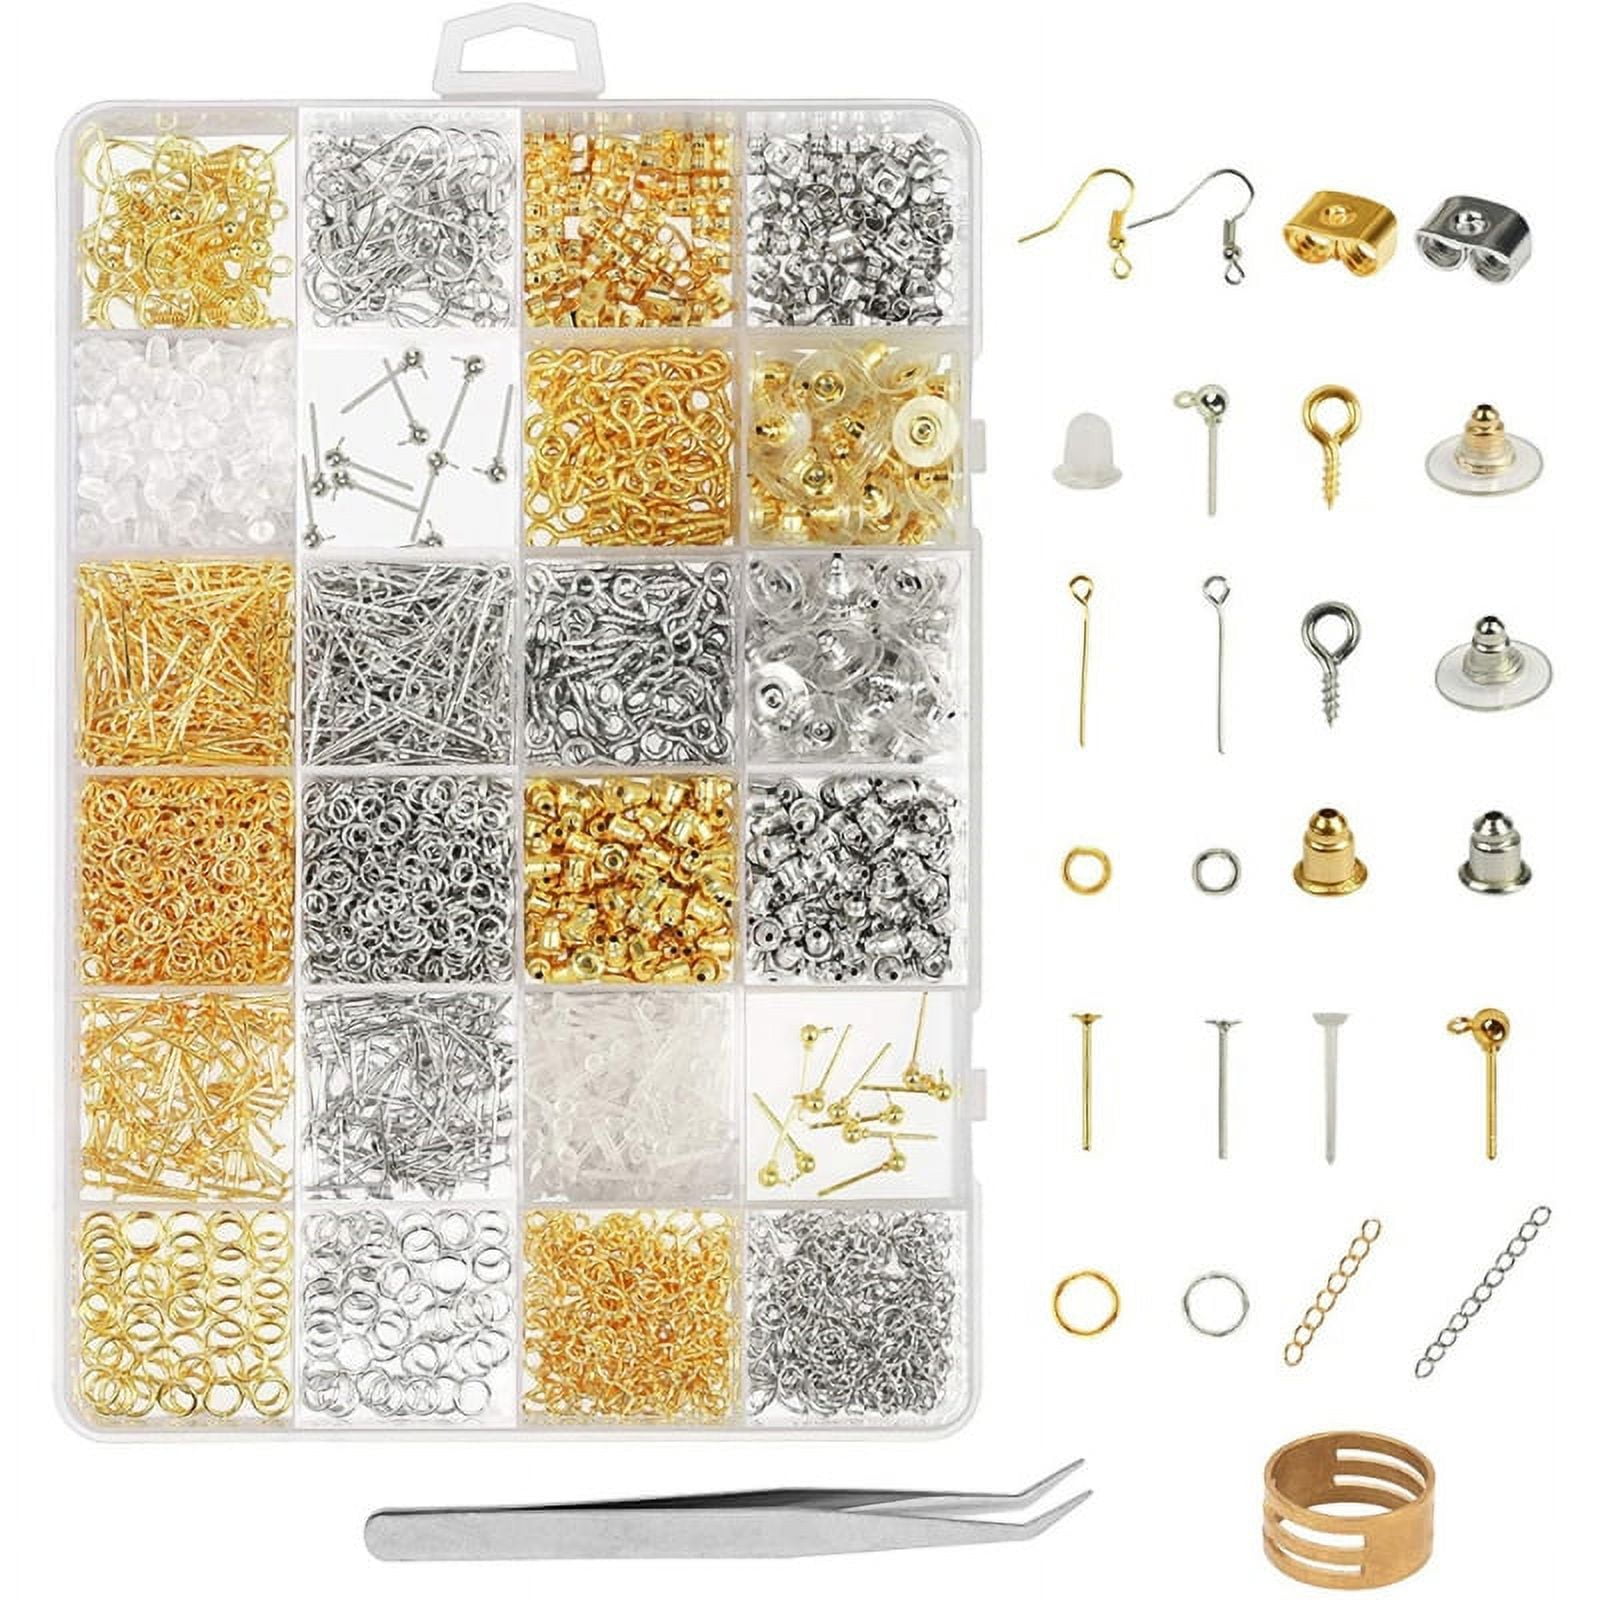 2020Pcs Jewelry Making Supplies Kit Earrings and Repair Tools